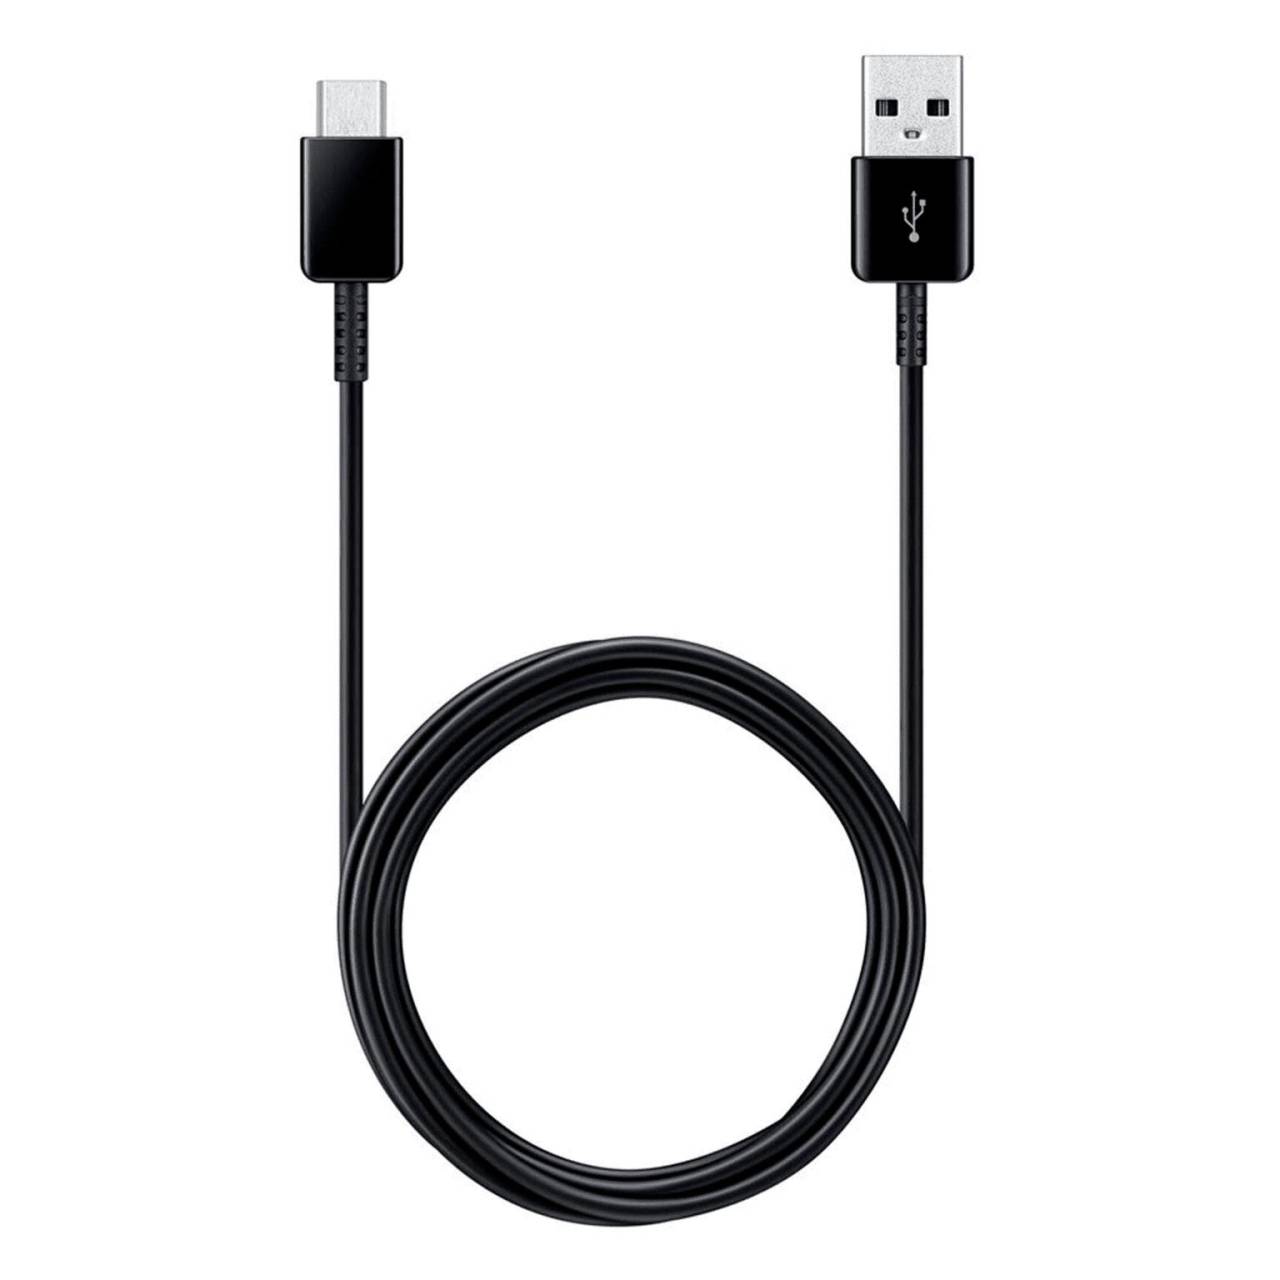 1,5m Kabel Apple iPhone Schnell Ladekabel Datenkabel USB Schwarze